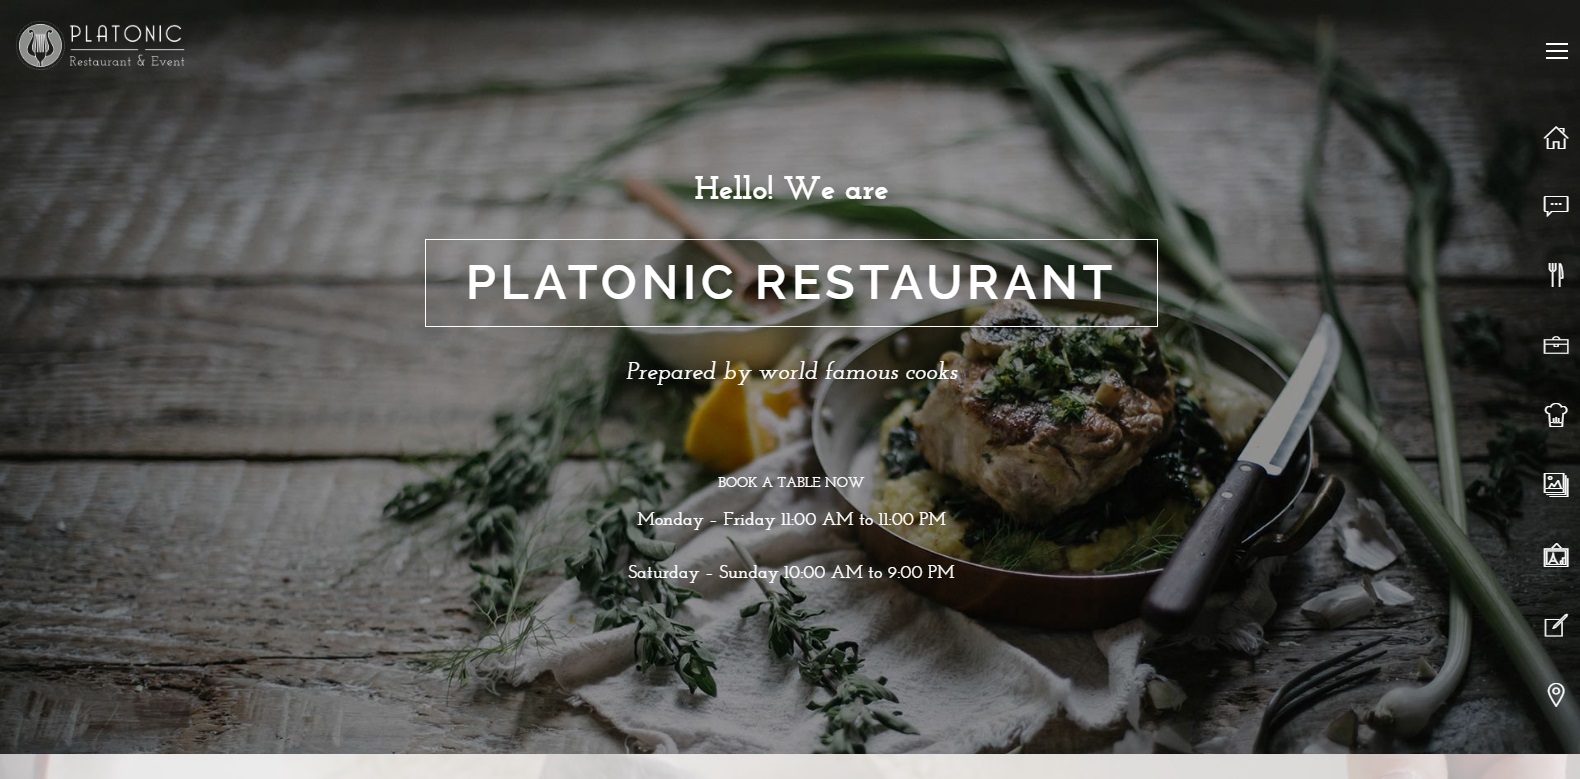 Platonic - Restaurant & Event WordPress Theme